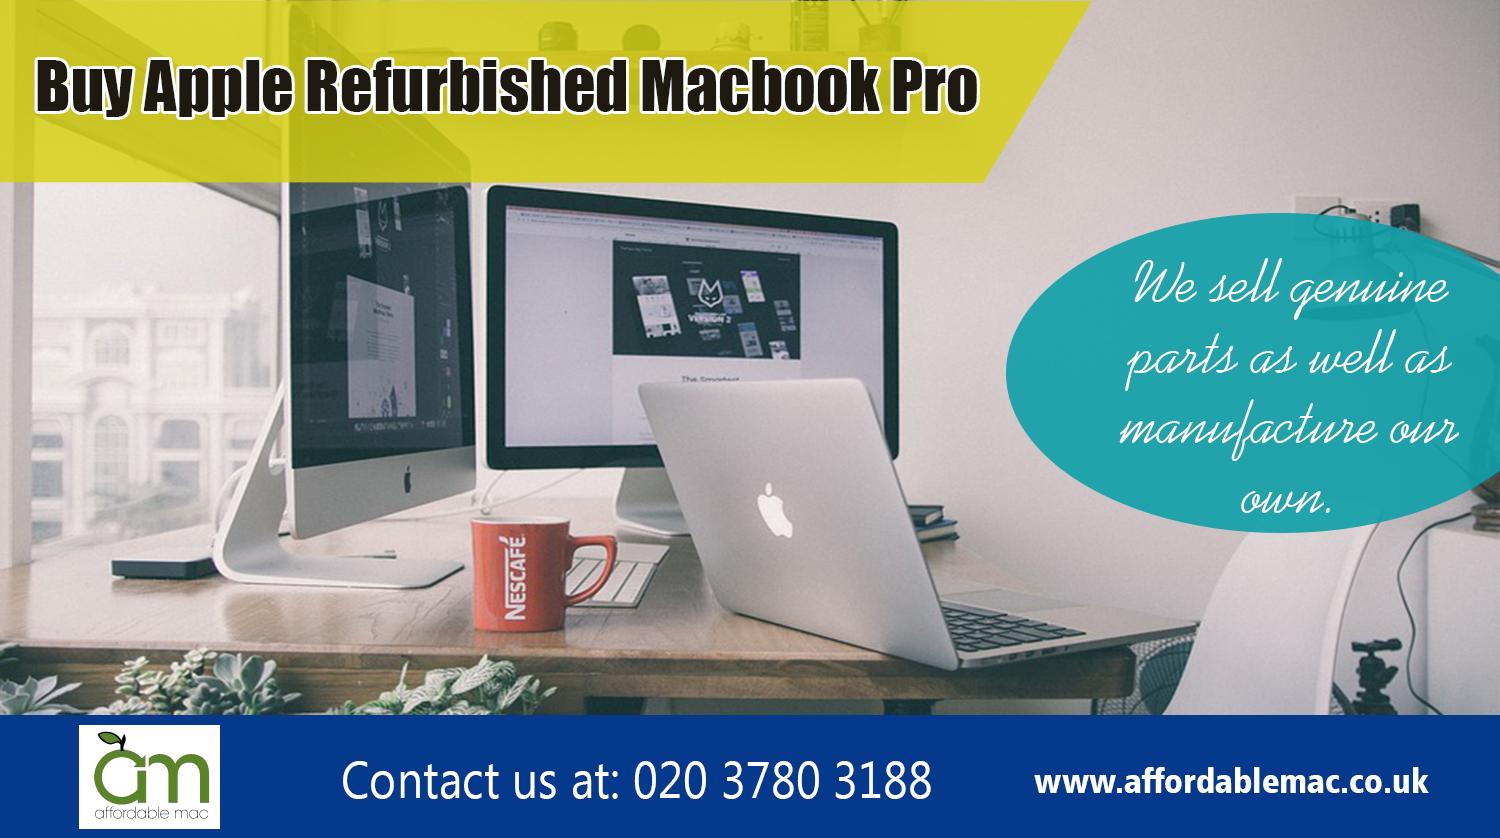 Buy Apple Refurbished Macbook Pro